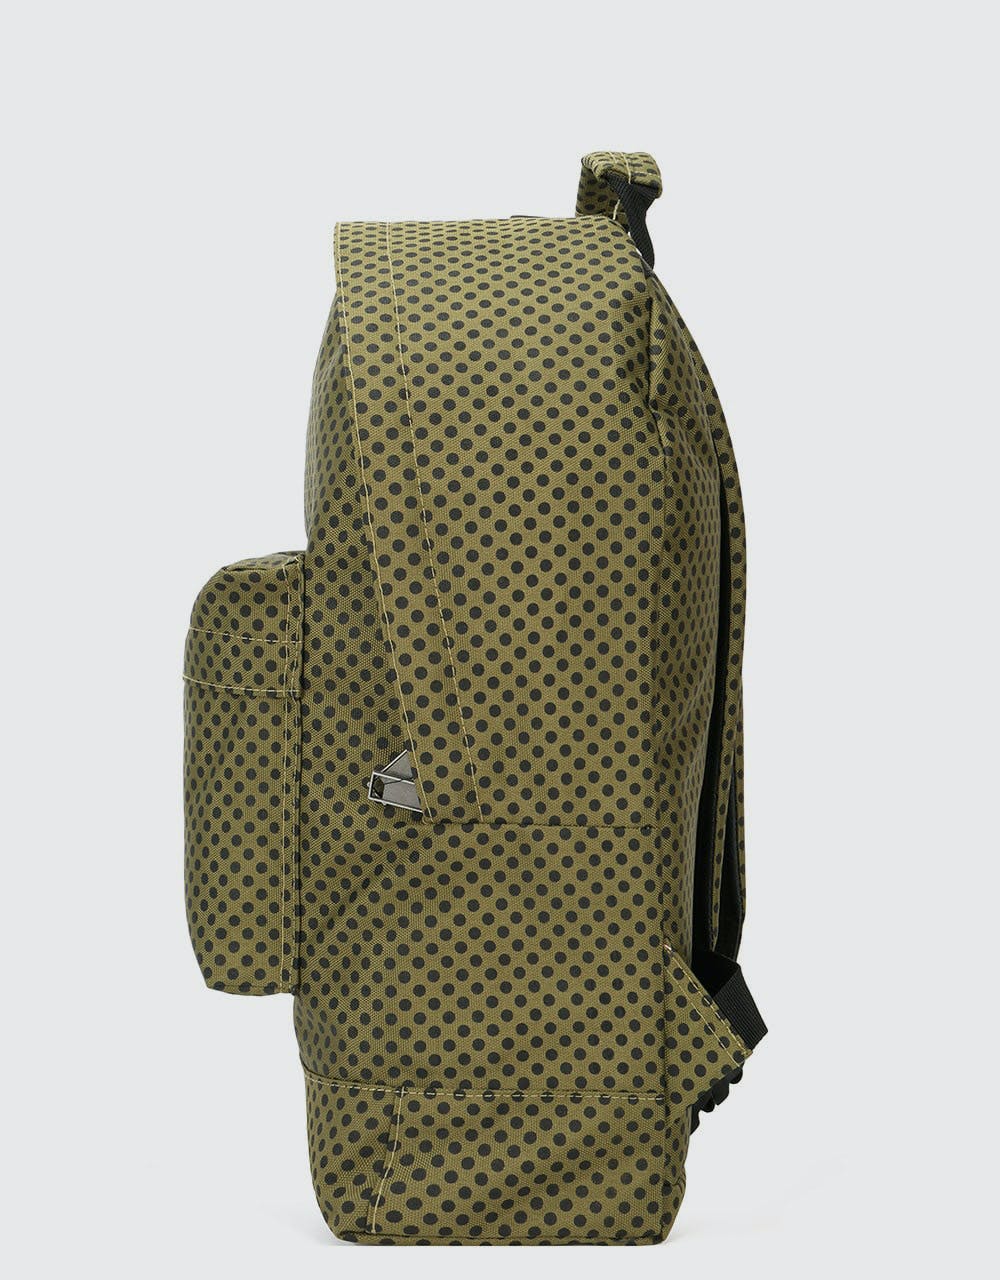 Mi-Pac Microdot Backpack - Khaki/Black